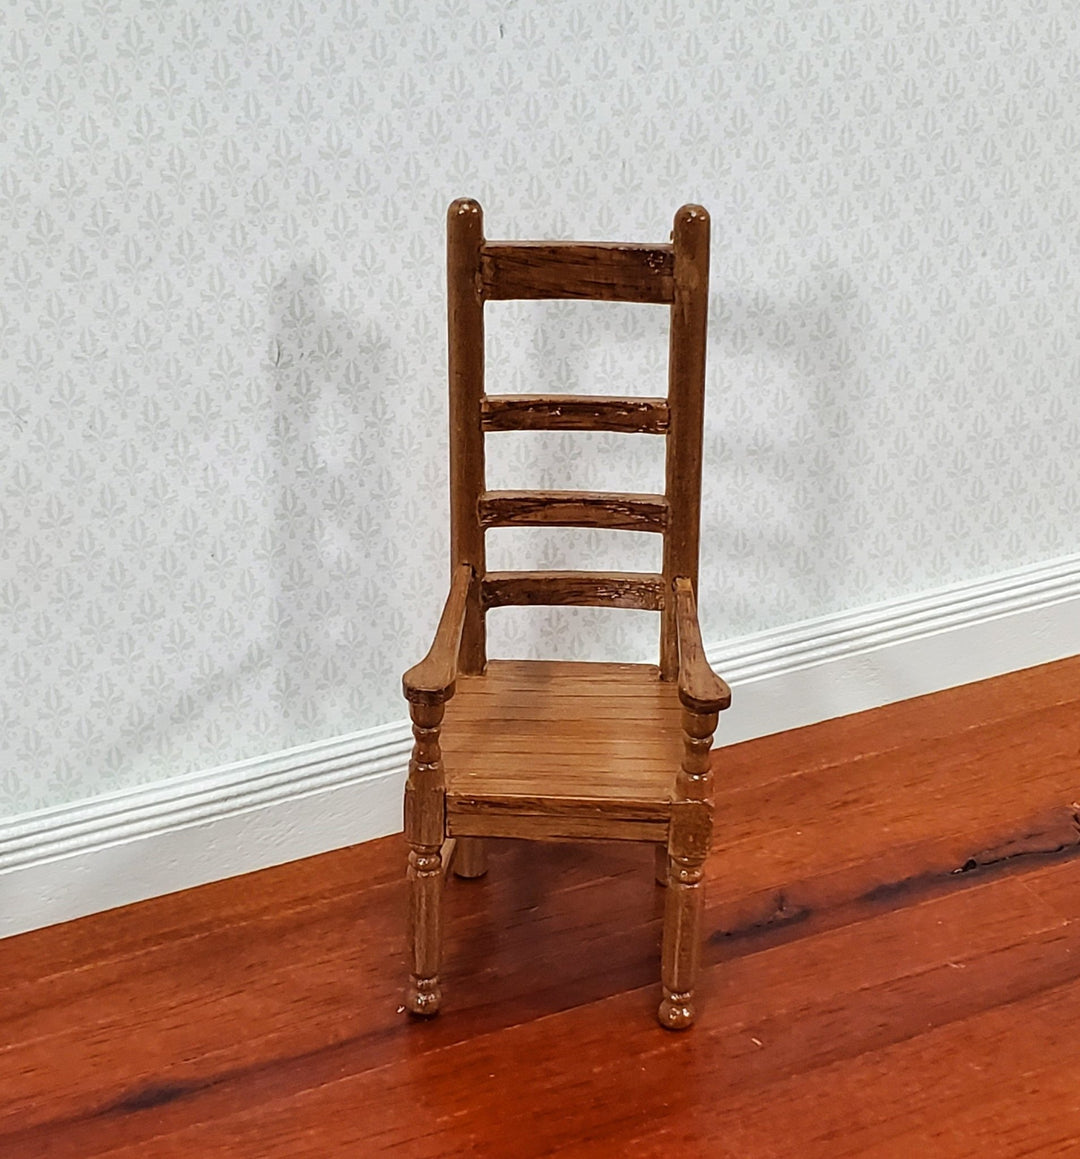 Dollhouse Arm Chair Ladderback Style Narrow Slim Profile 1:12 Scale Walnut Finish - Miniature Crush